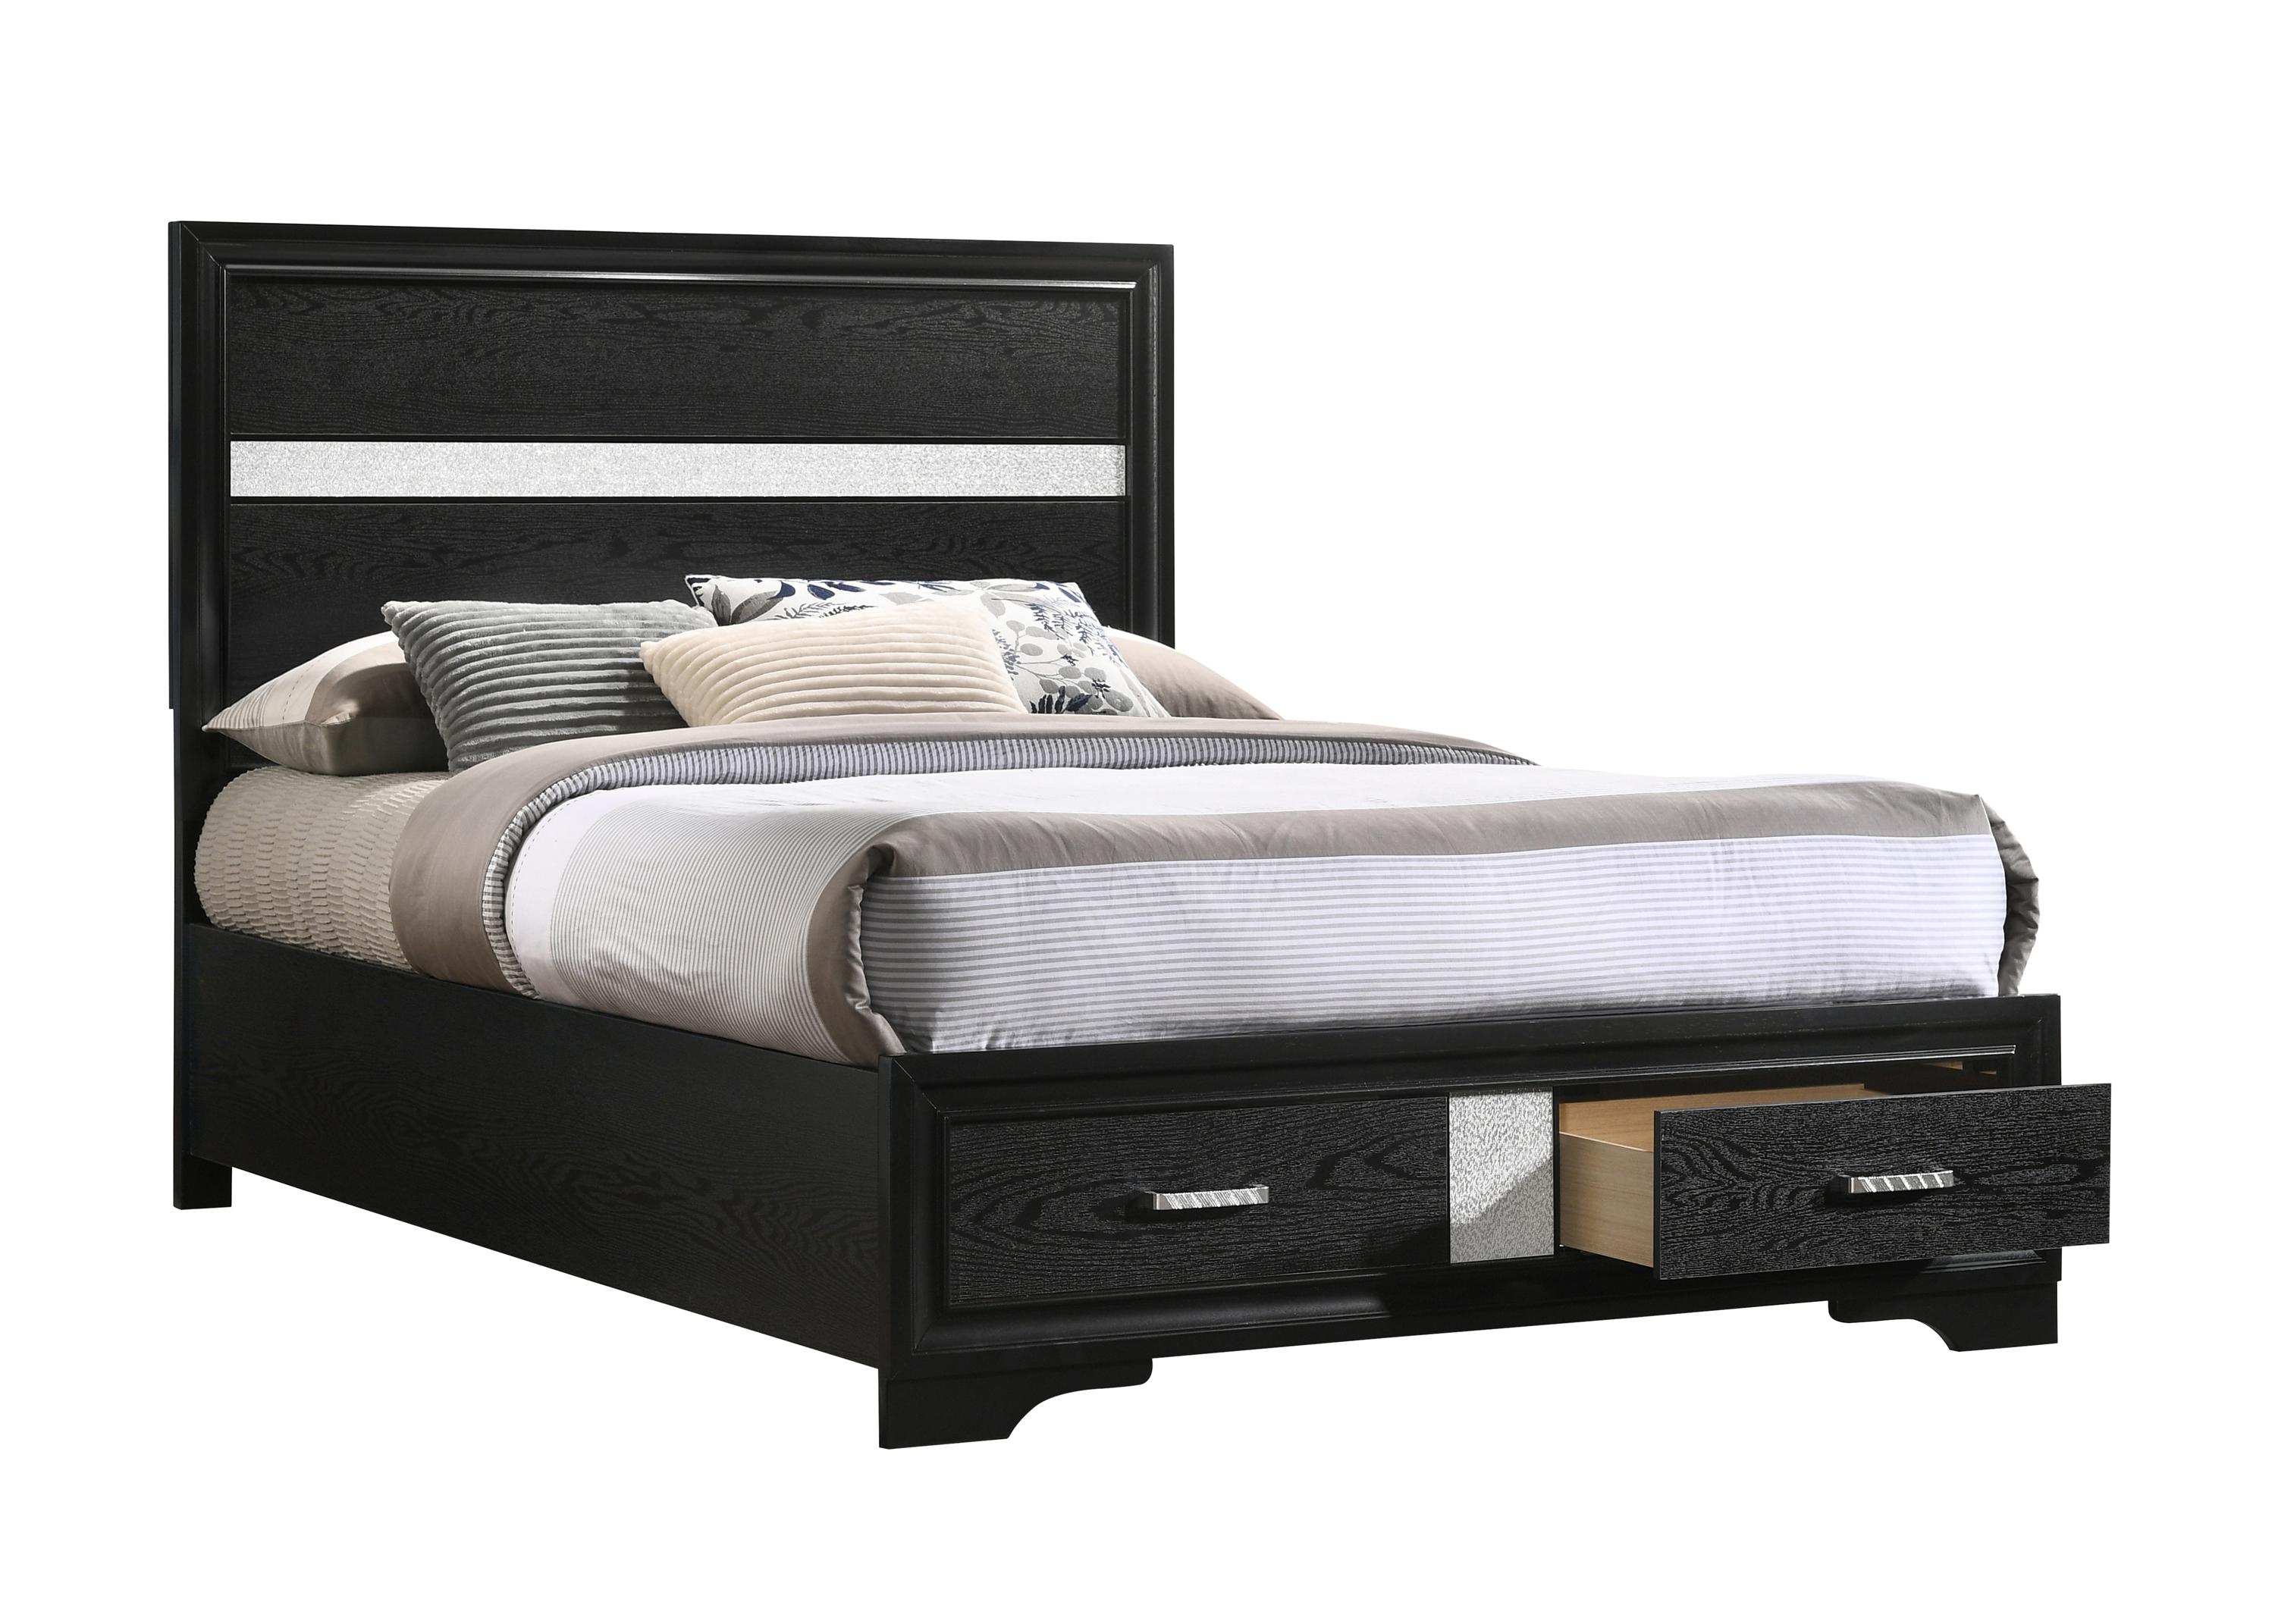 

    
Modern Black Wood Full Storage Bedroom Set 6pcs Coaster 206361F Miranda
